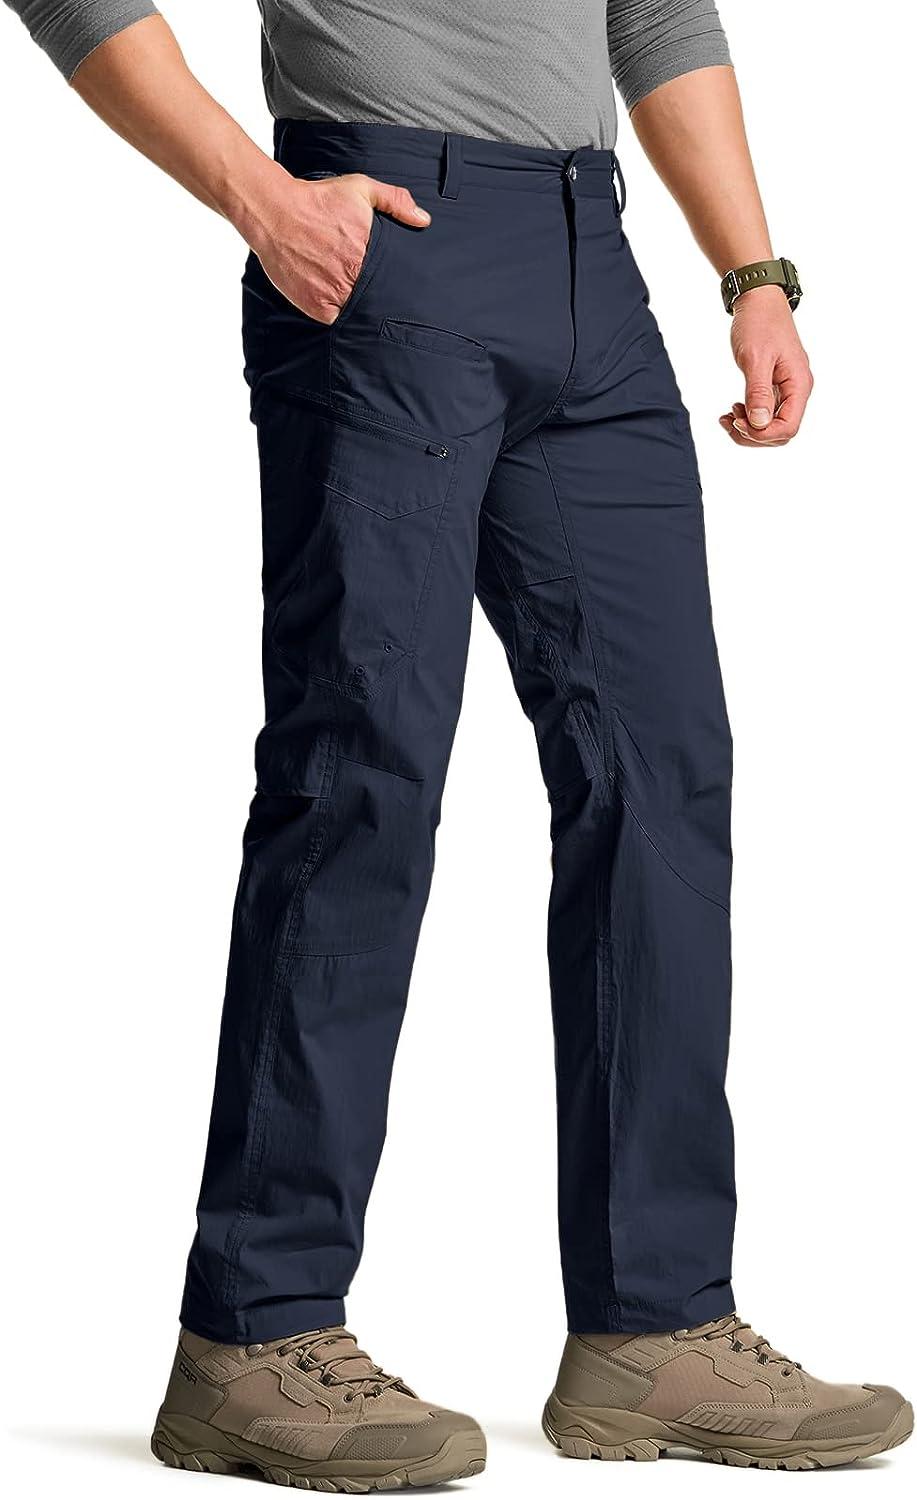  CQR Men's Cool Dry Tactical Pants, Water Resistant